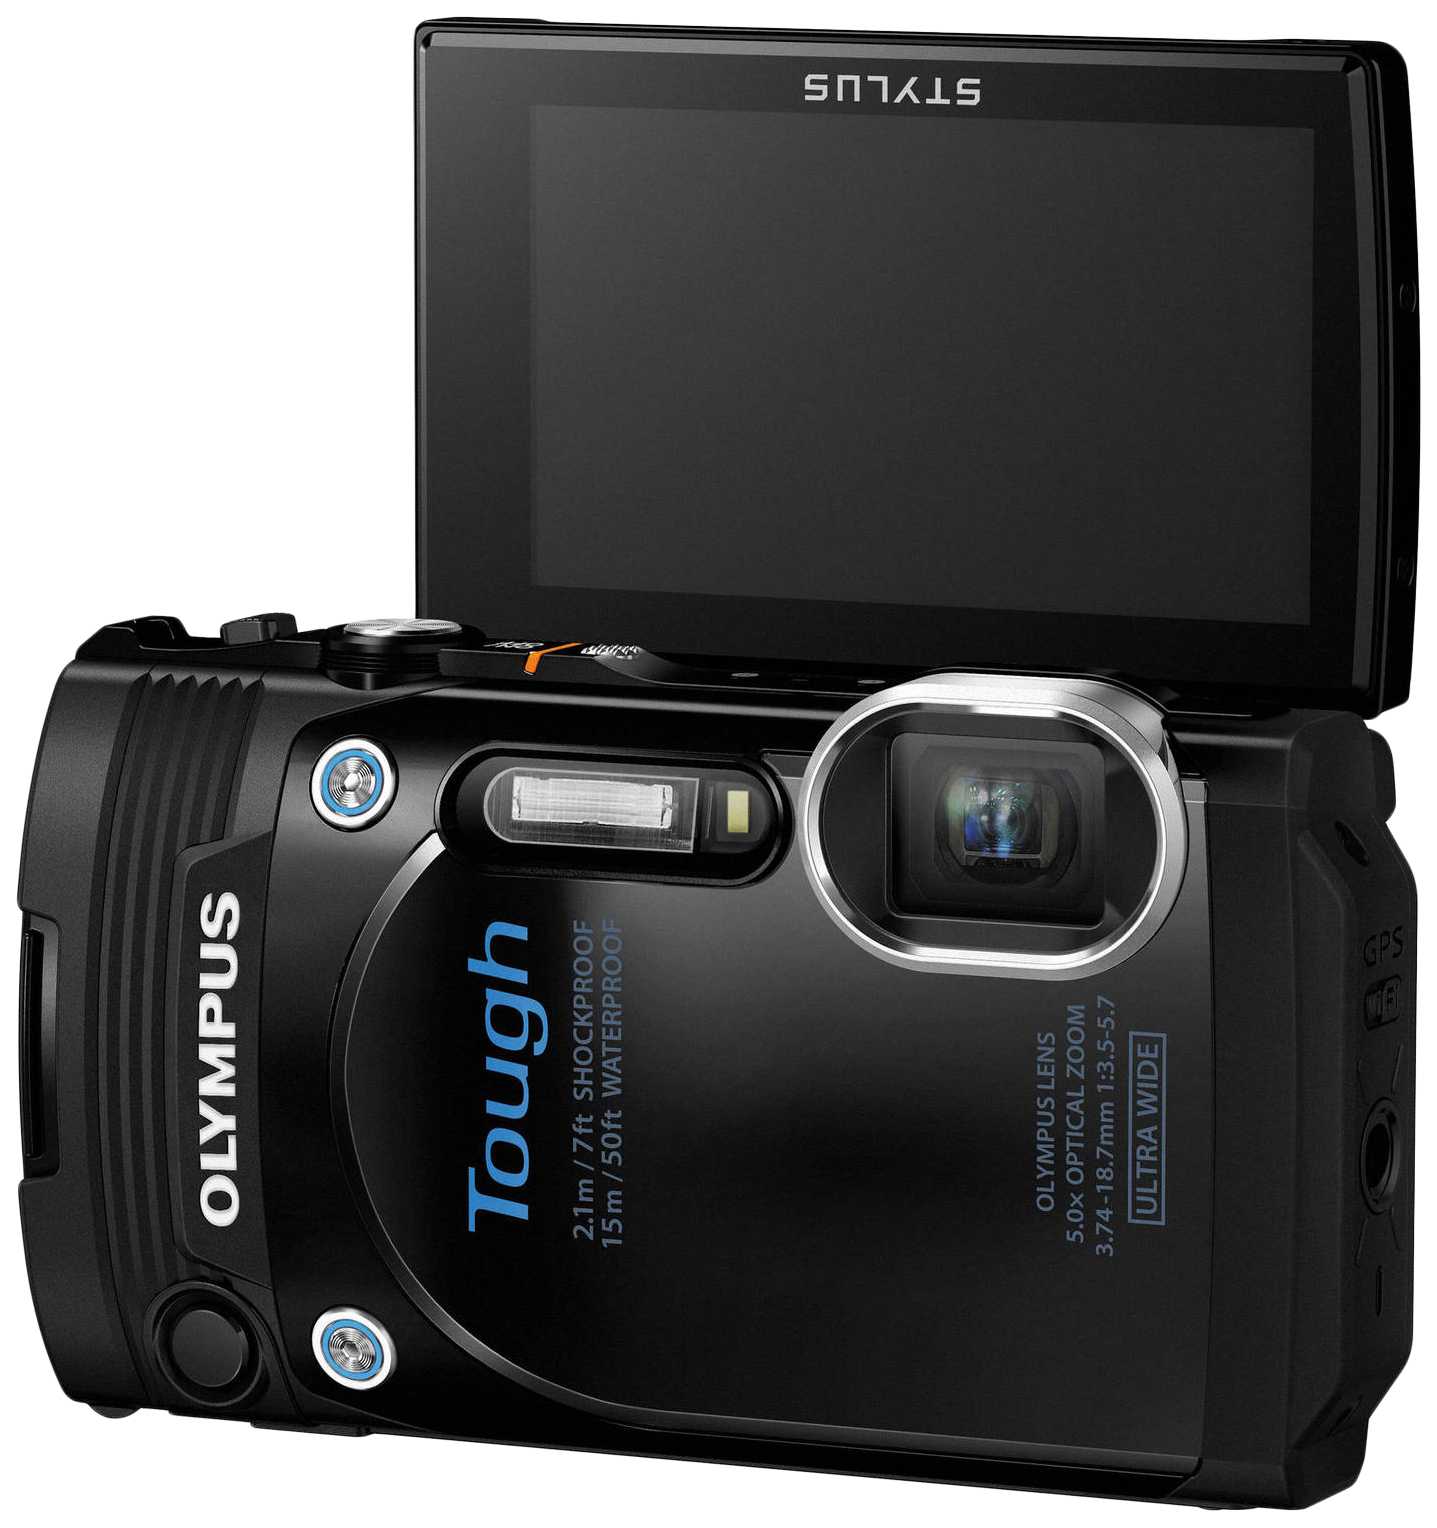 Обзор фотоаппарата - olympus tough tg-6